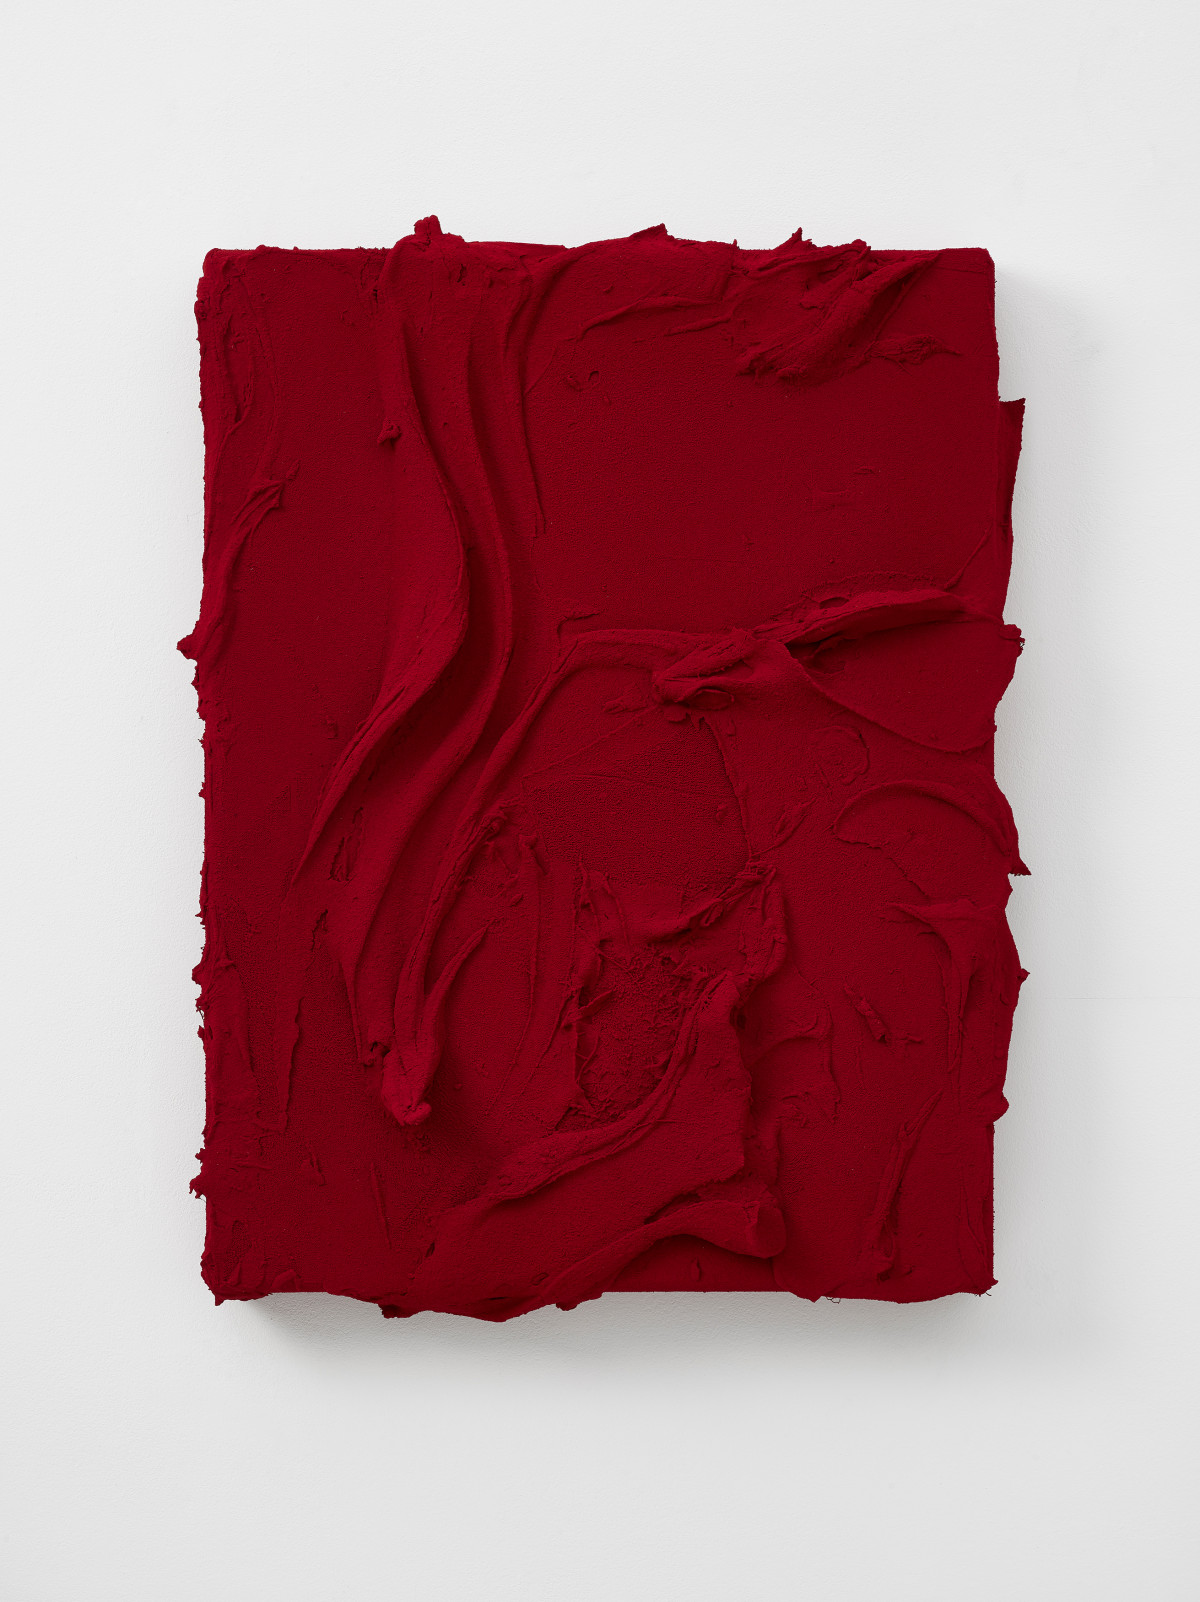 Jason Martin, ‘Thysia (Quinacridone red / Quinacridone scarlet)’, 2015, Mixed media on aluminium